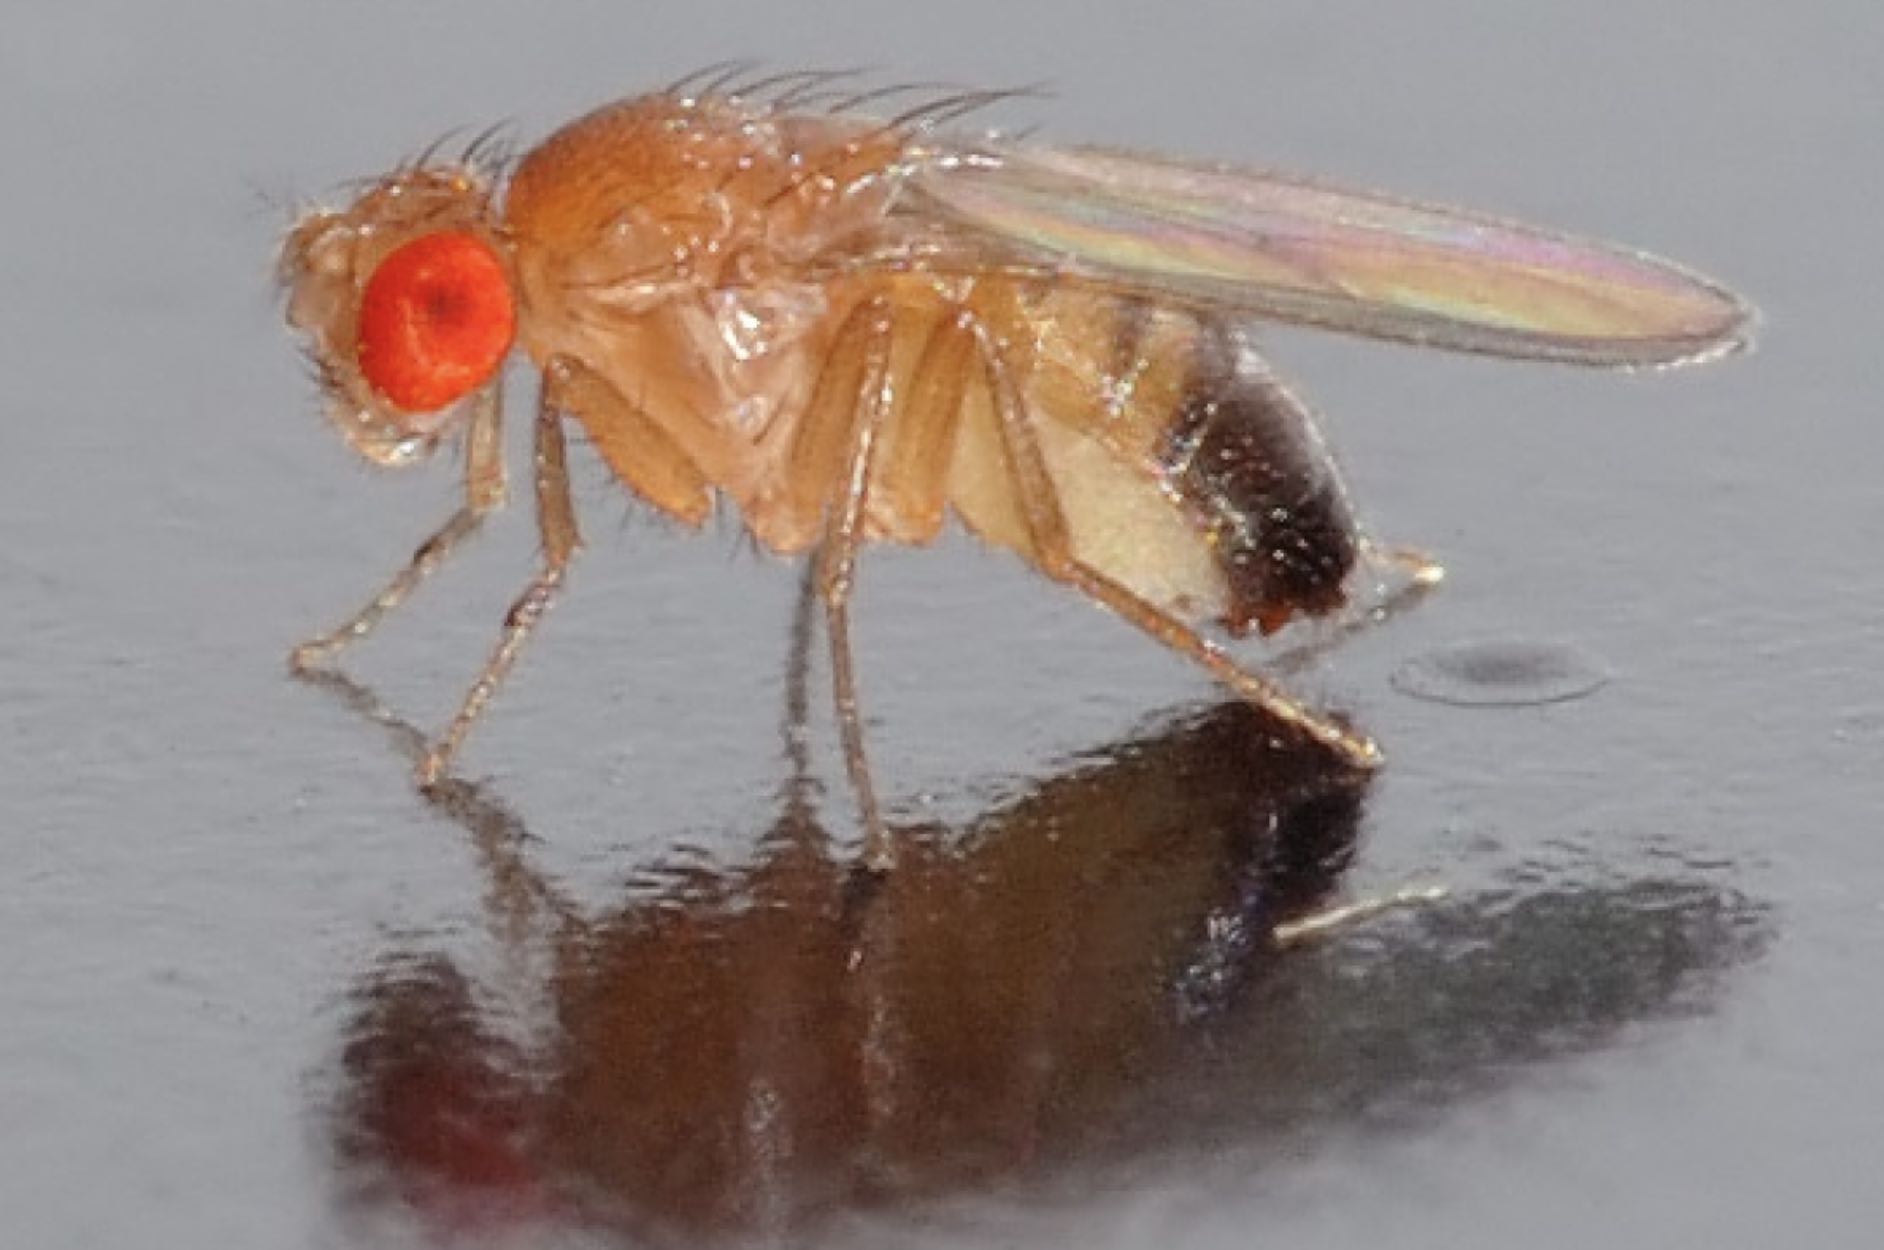 Unusual Labmates: Fruit flies